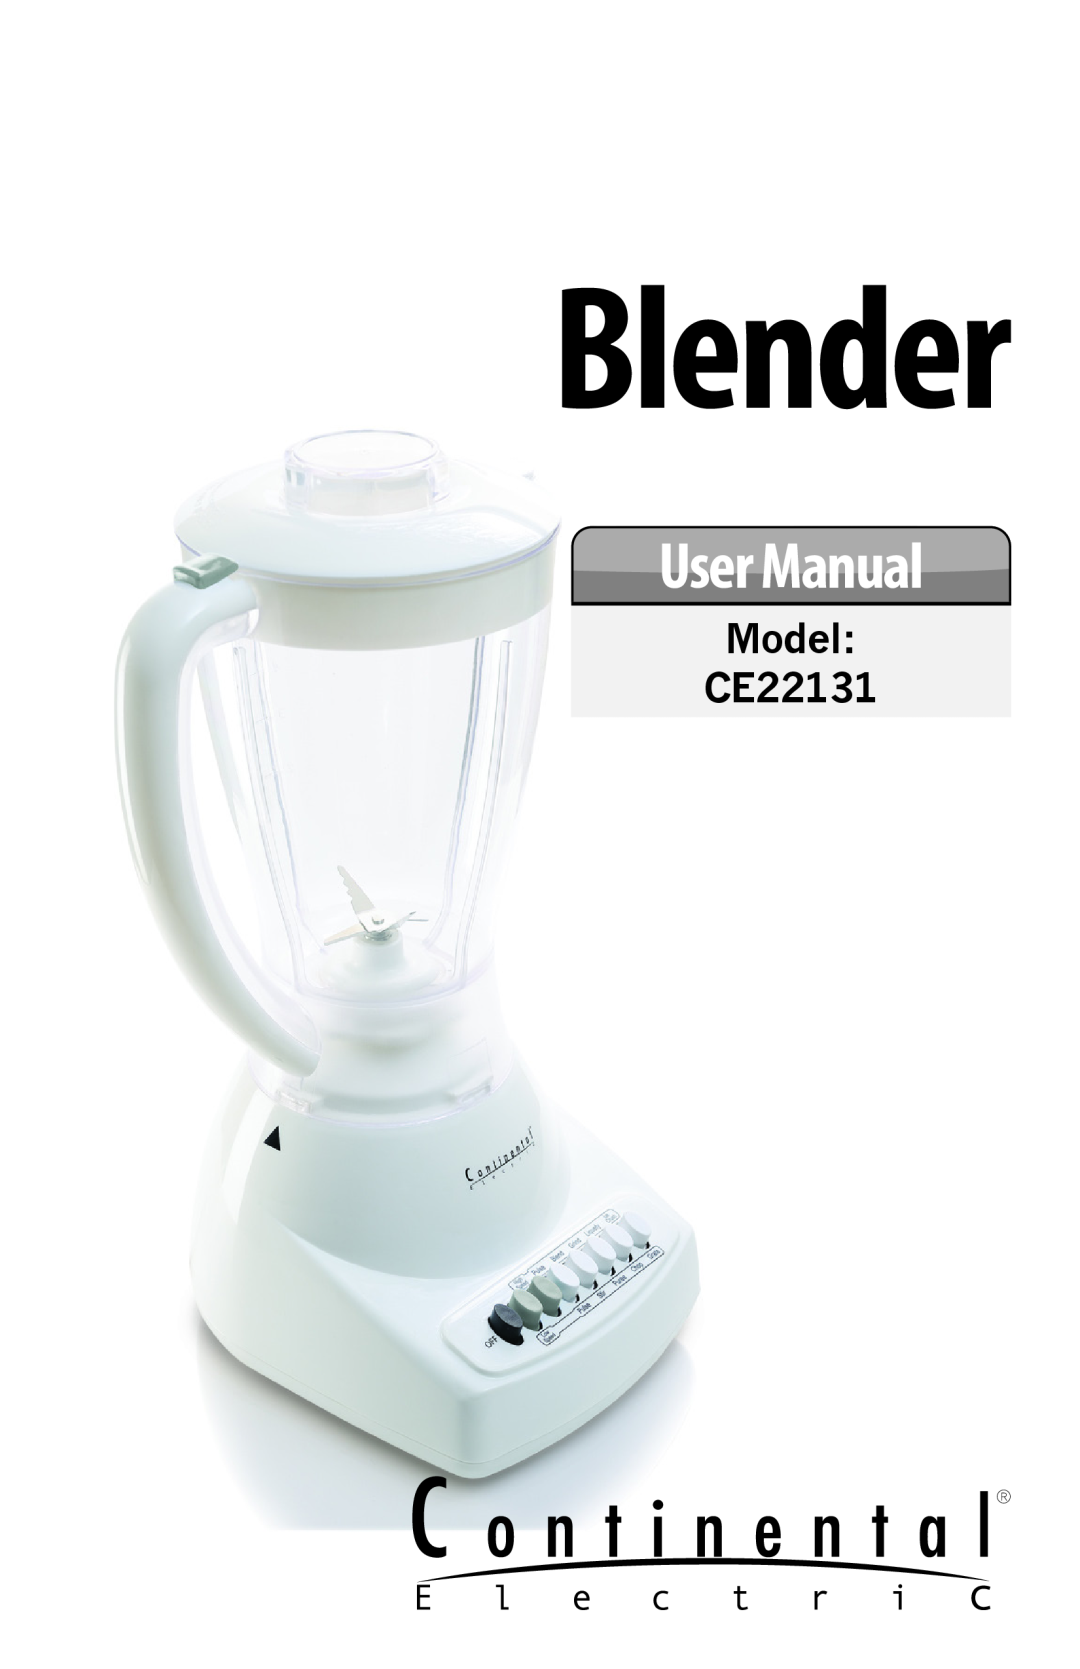 Continental Electric user manual Model CE22131, Blender 